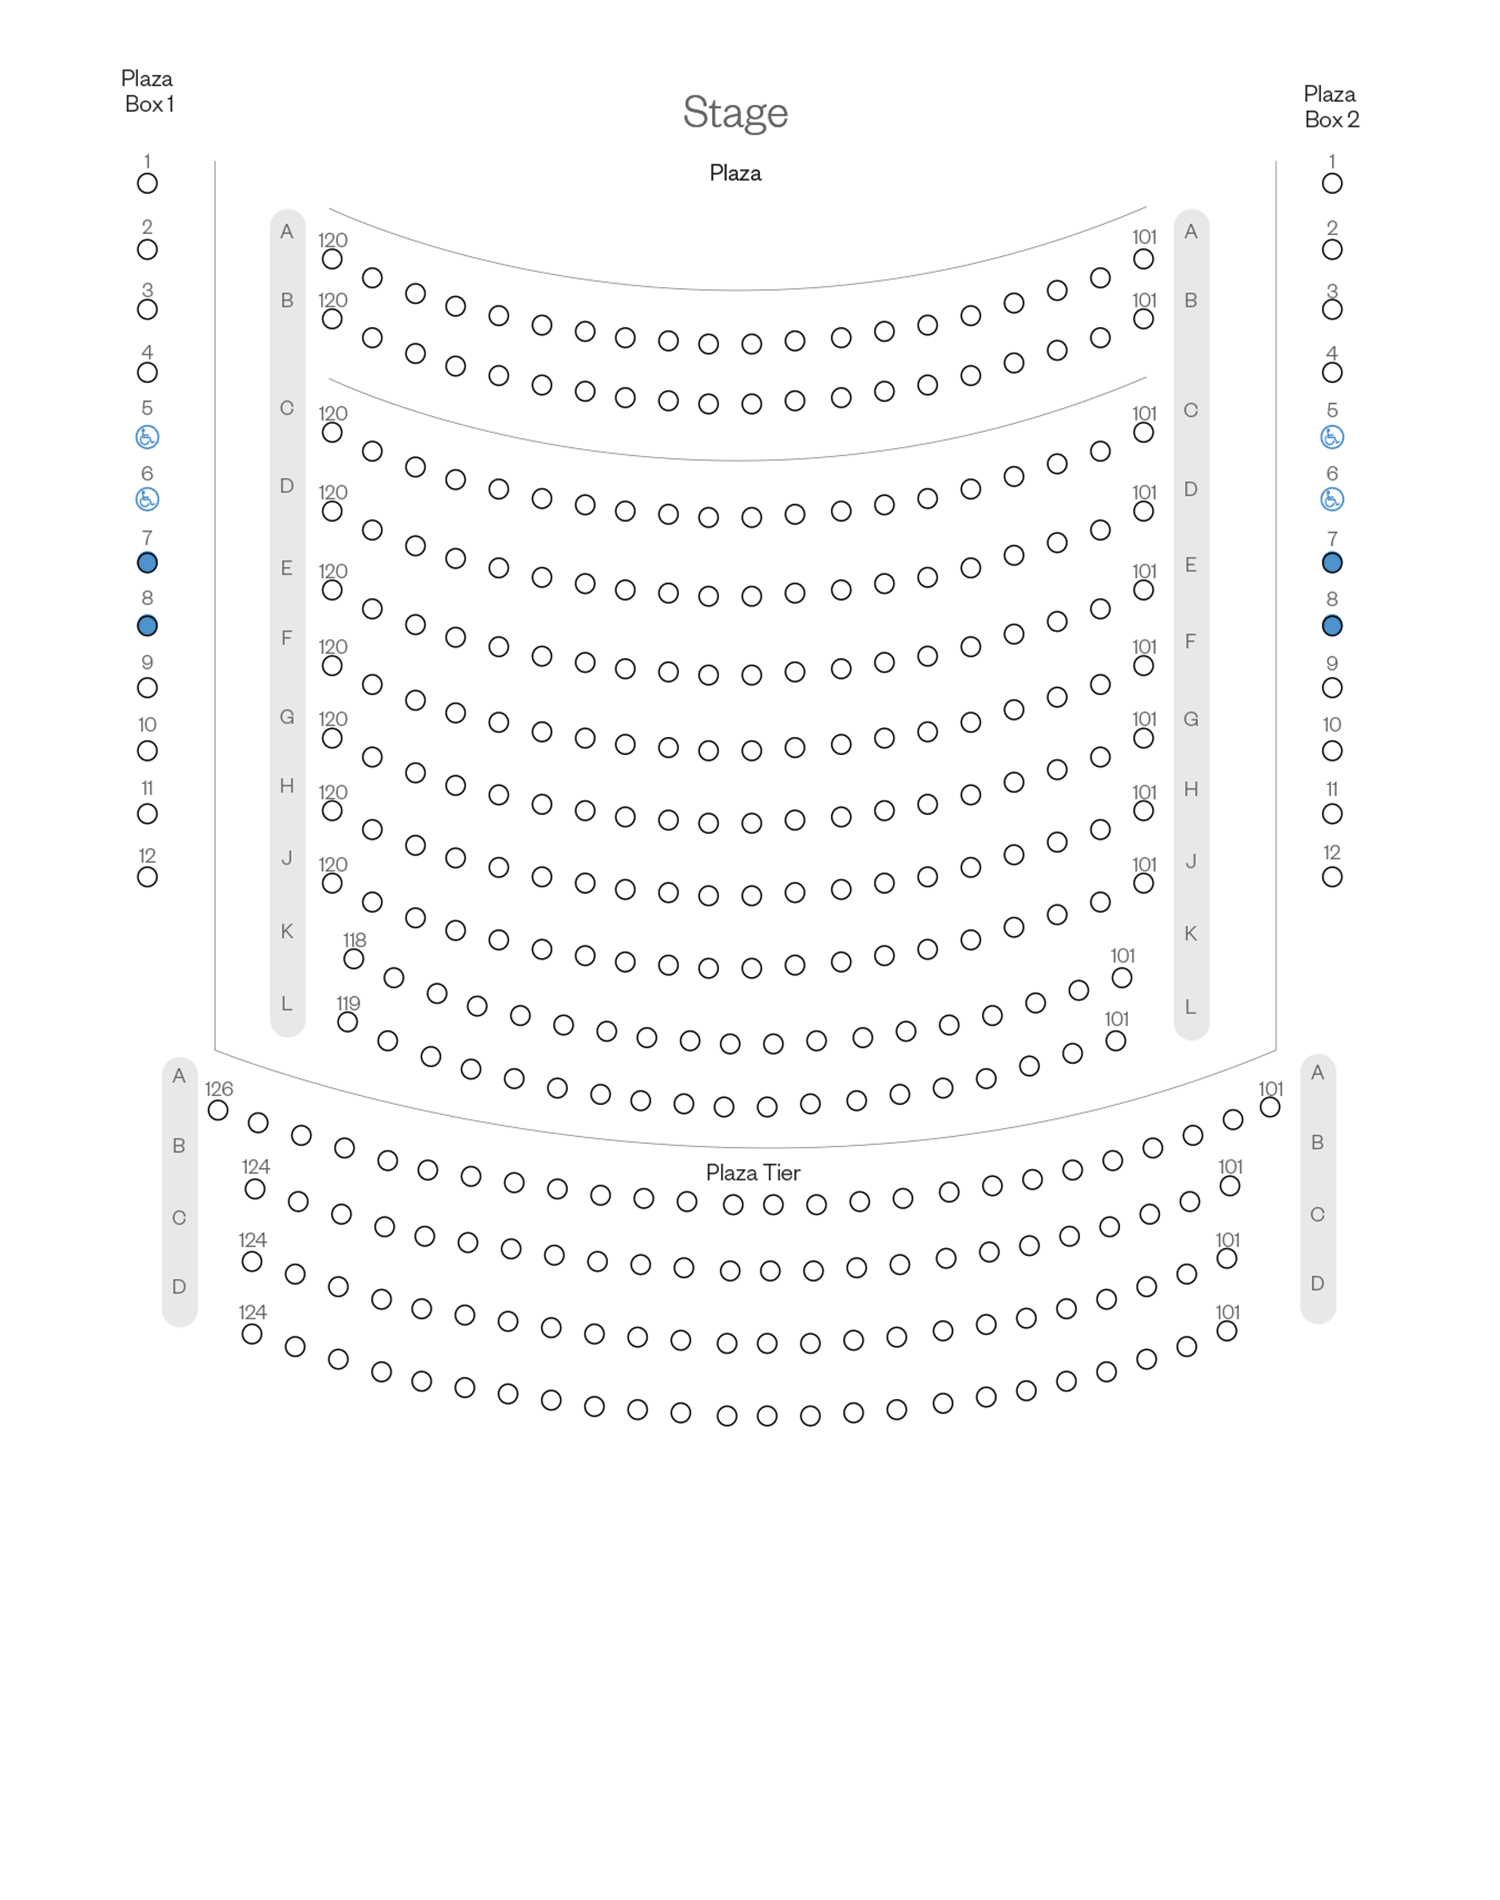 Perelman Theater Plaza Seating Chart